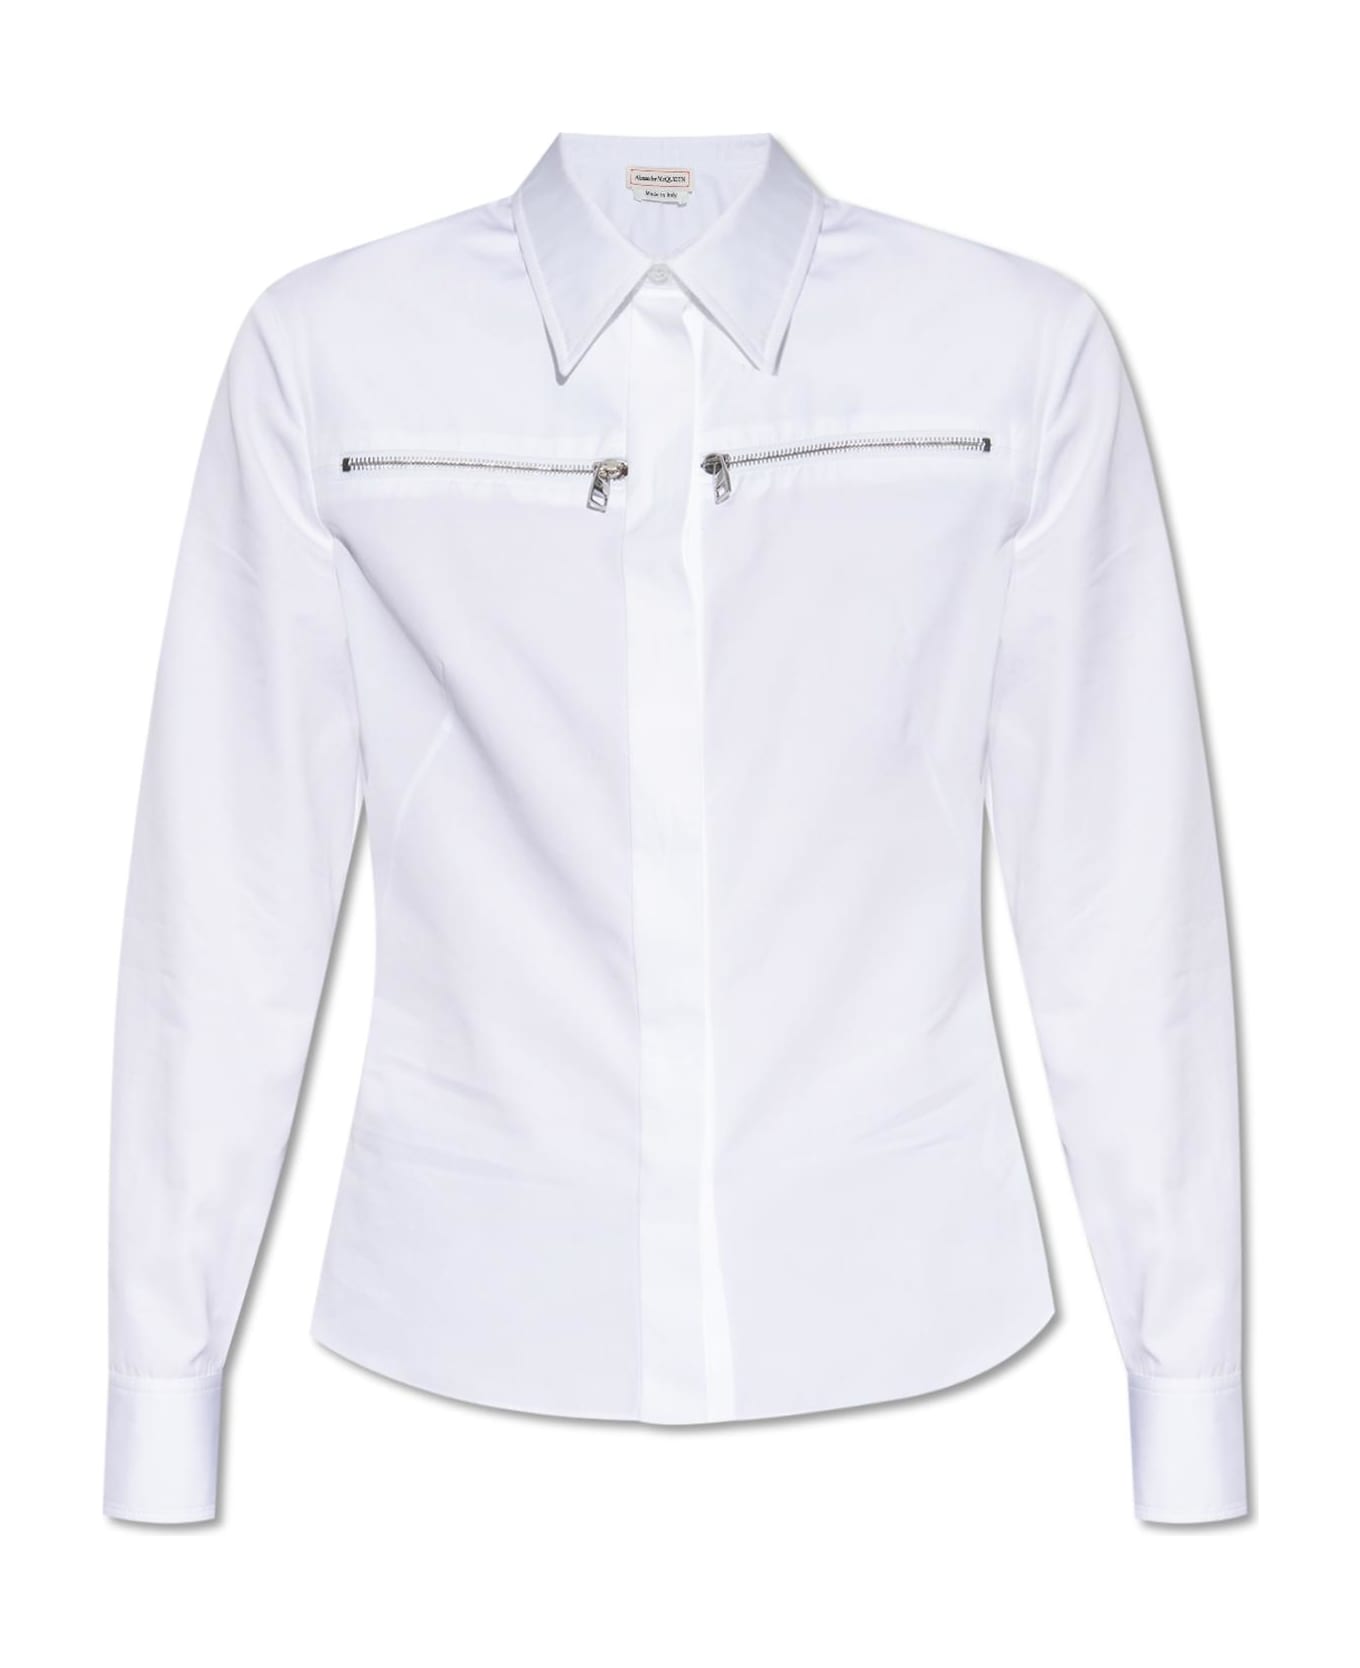 Alexander McQueen Zip Pocket Long-sleeved Shirt